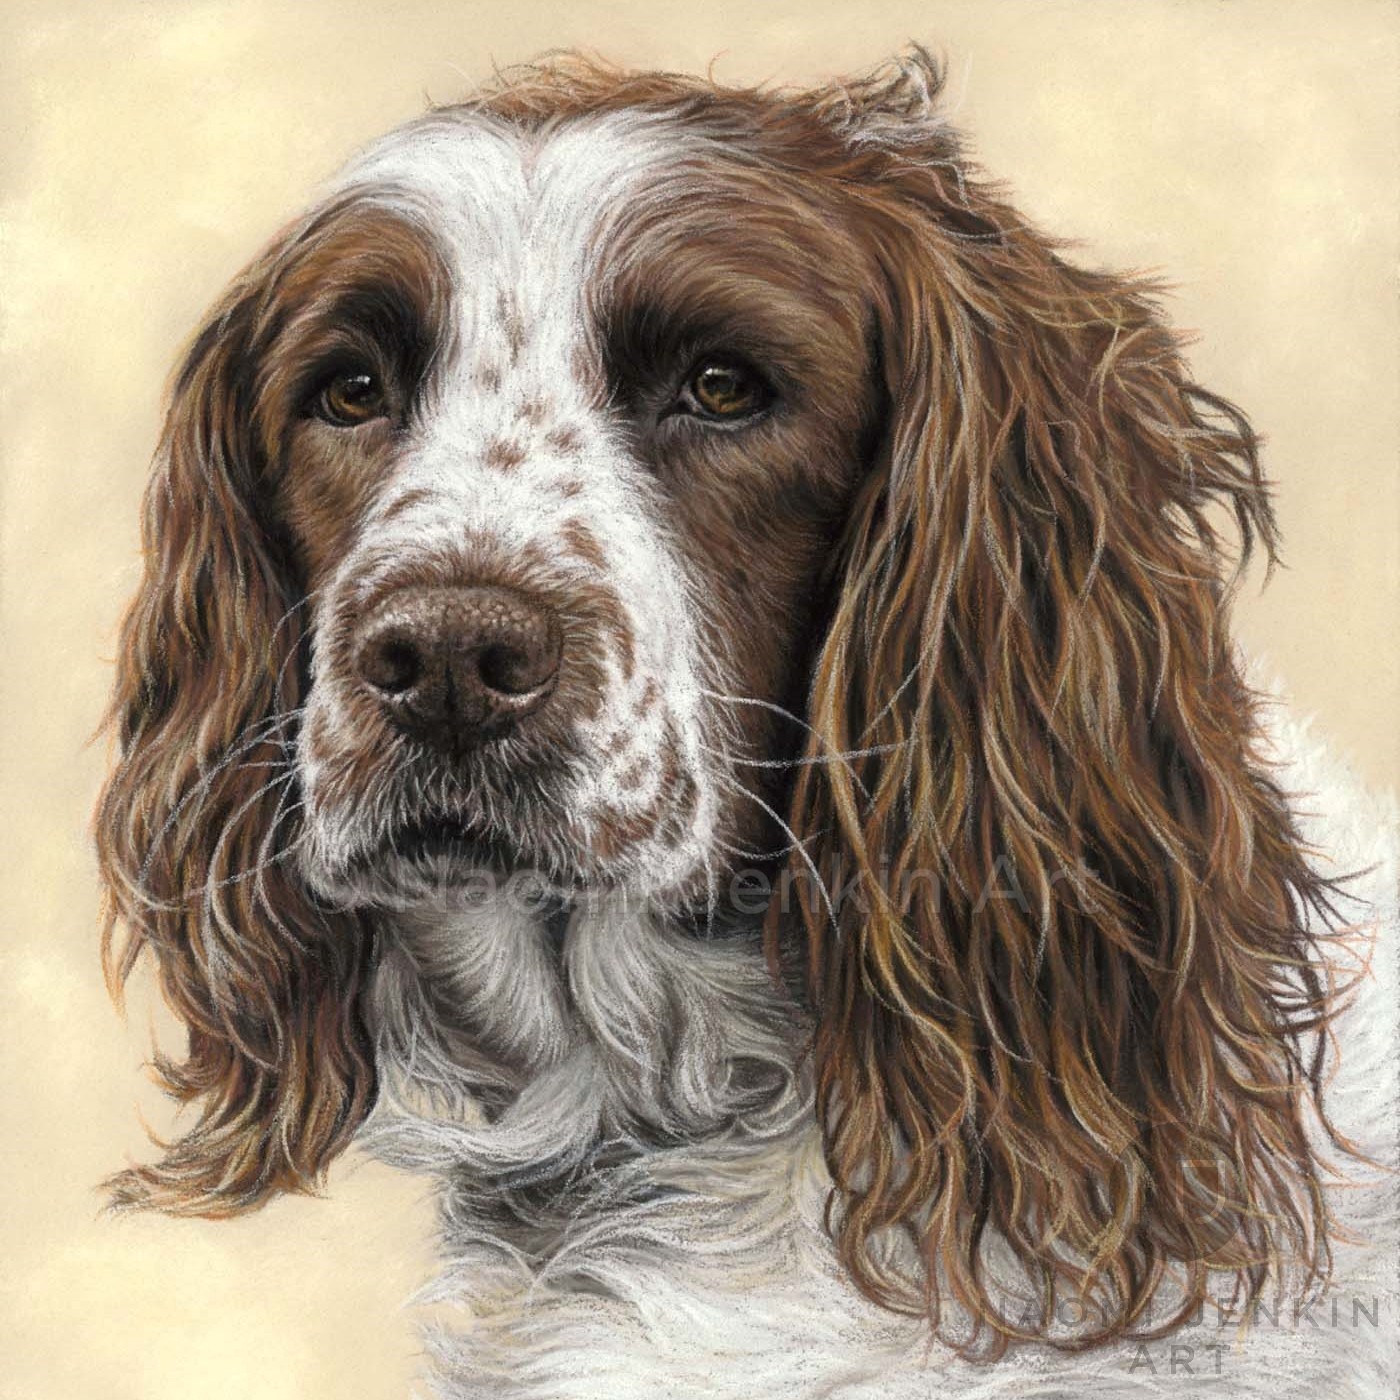 English springer spaniel portrait by dog portrait artist Naomi Jenkin. 